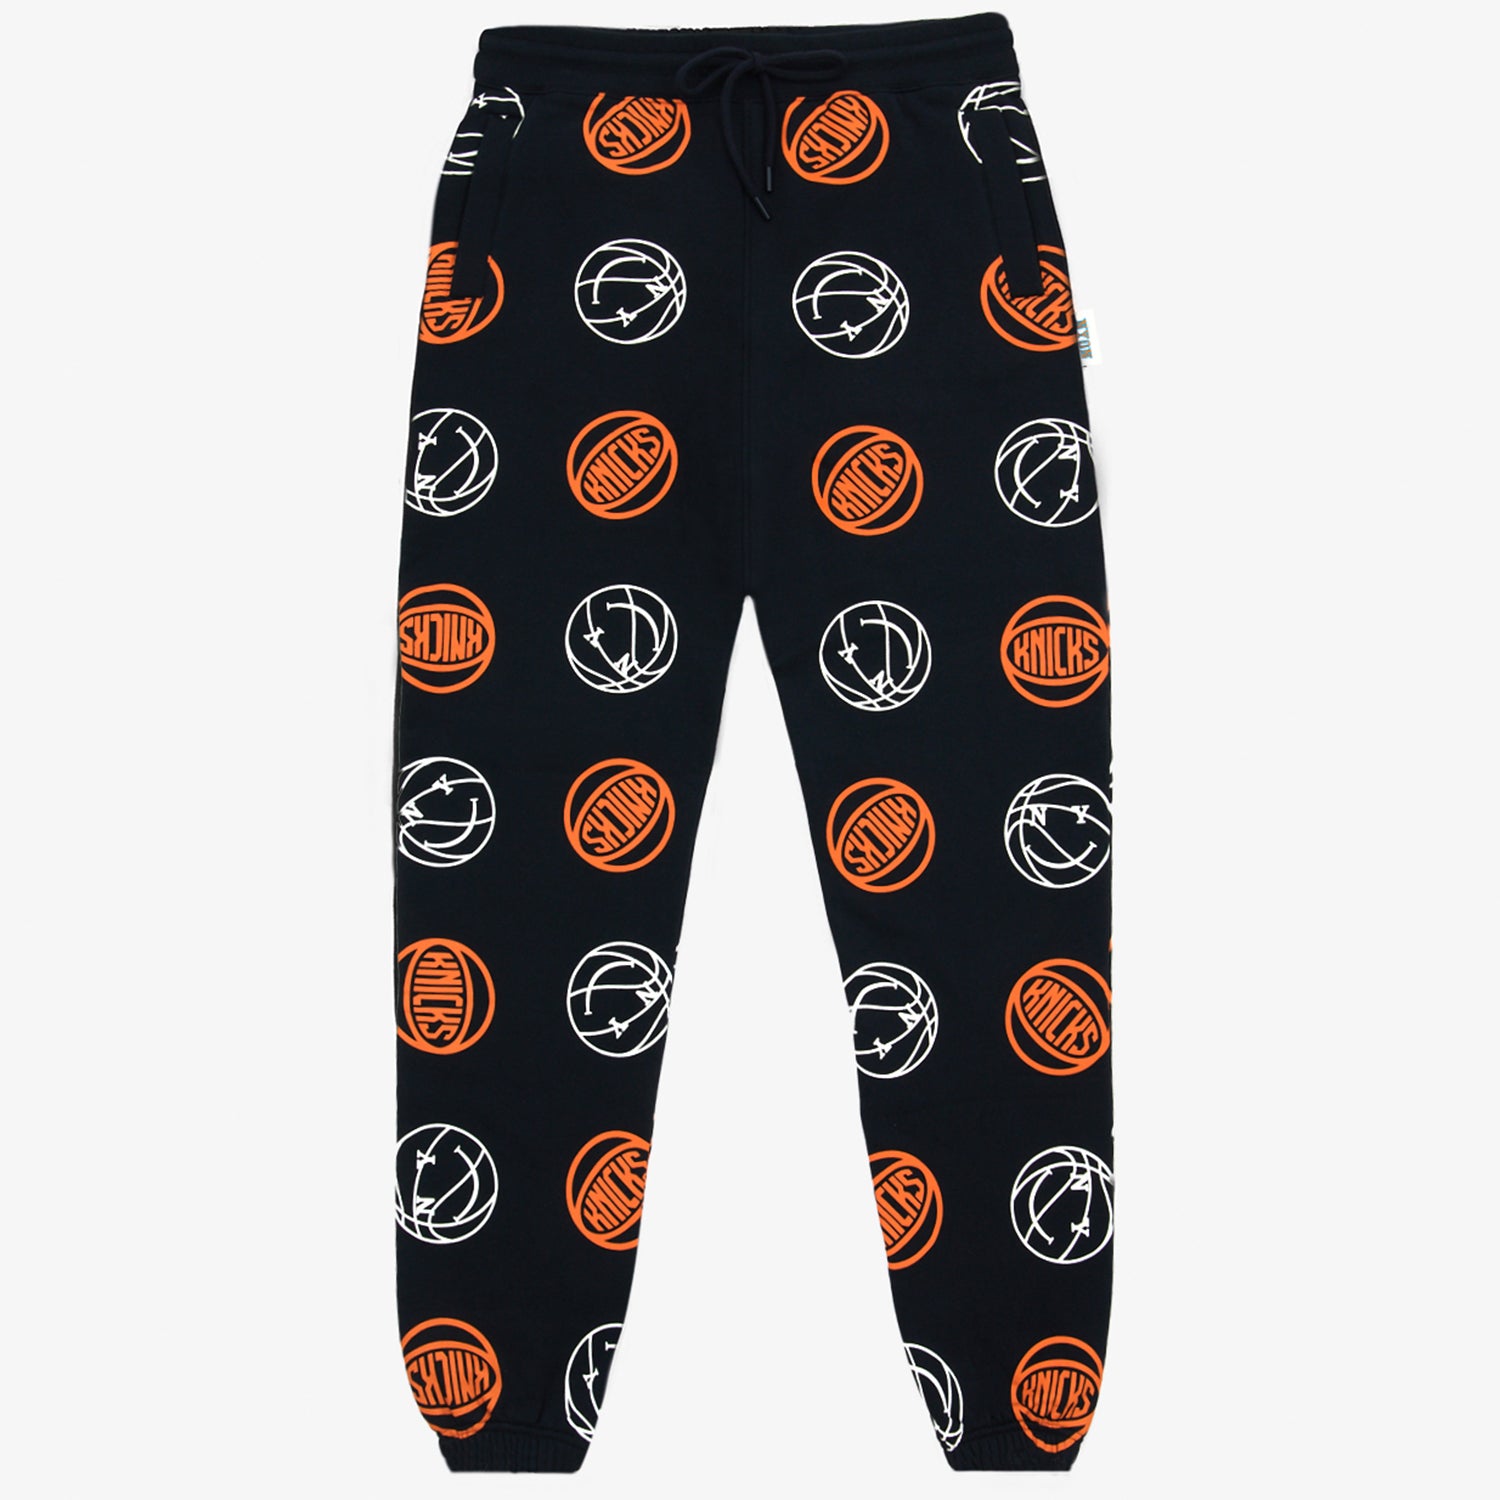 NYON x Knicks "Full Court" Sweatpants In Black, Orange & White - Front View